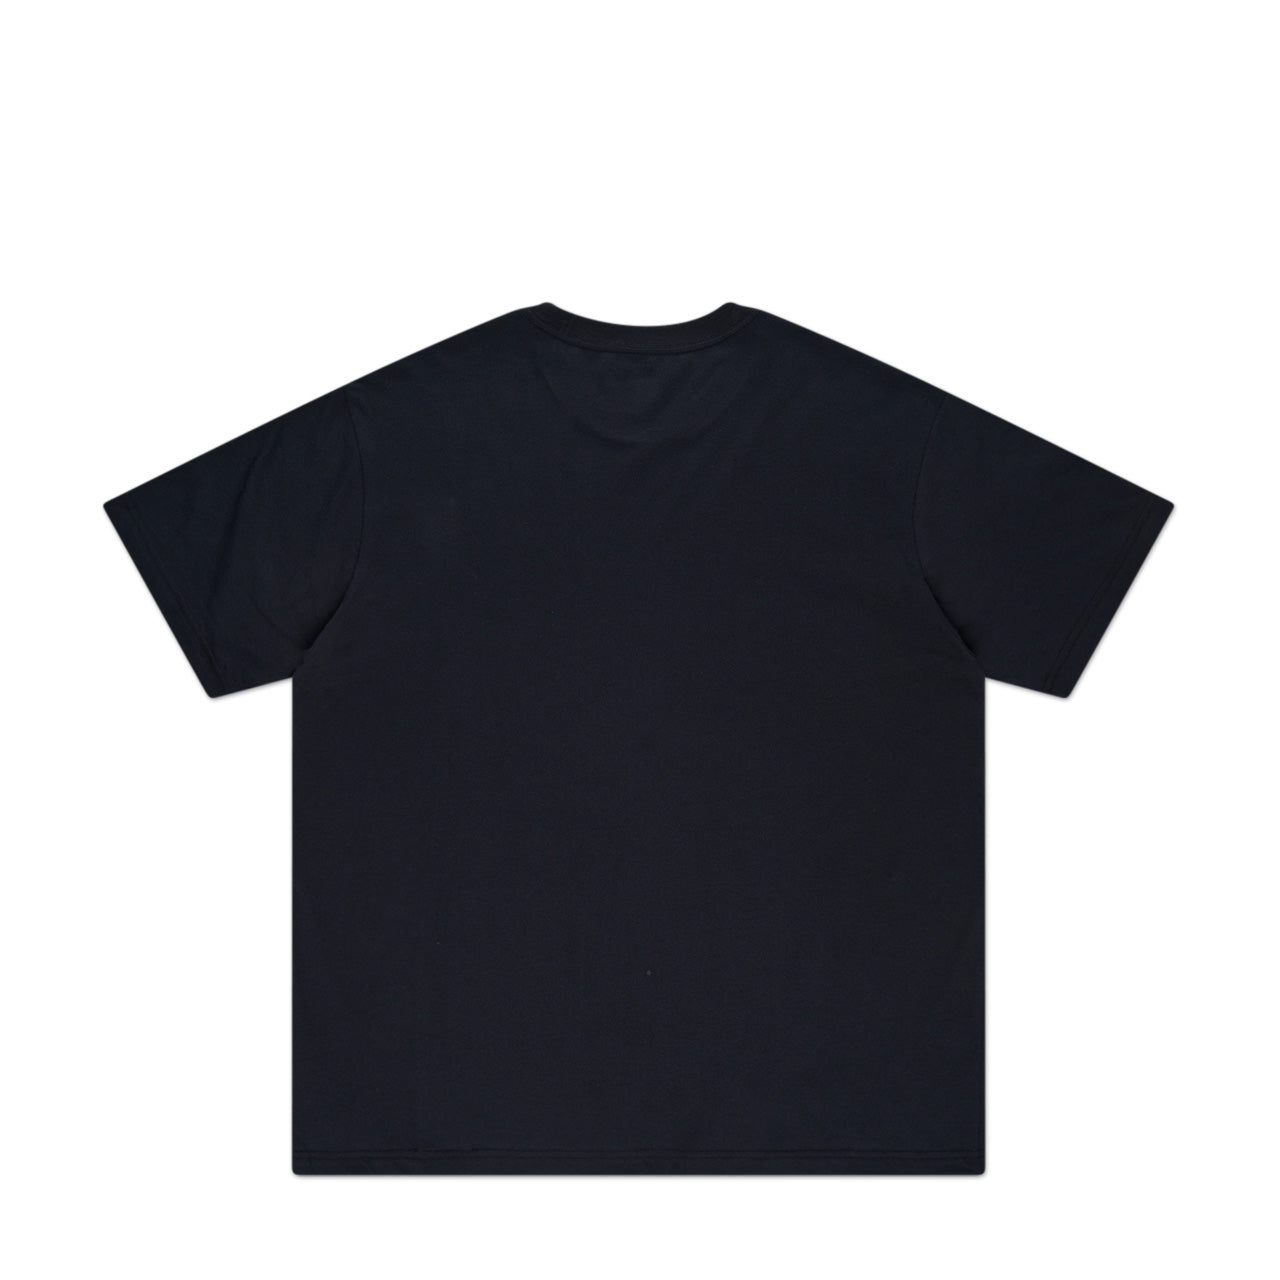 human made 3-pack t-shirt pack (black)